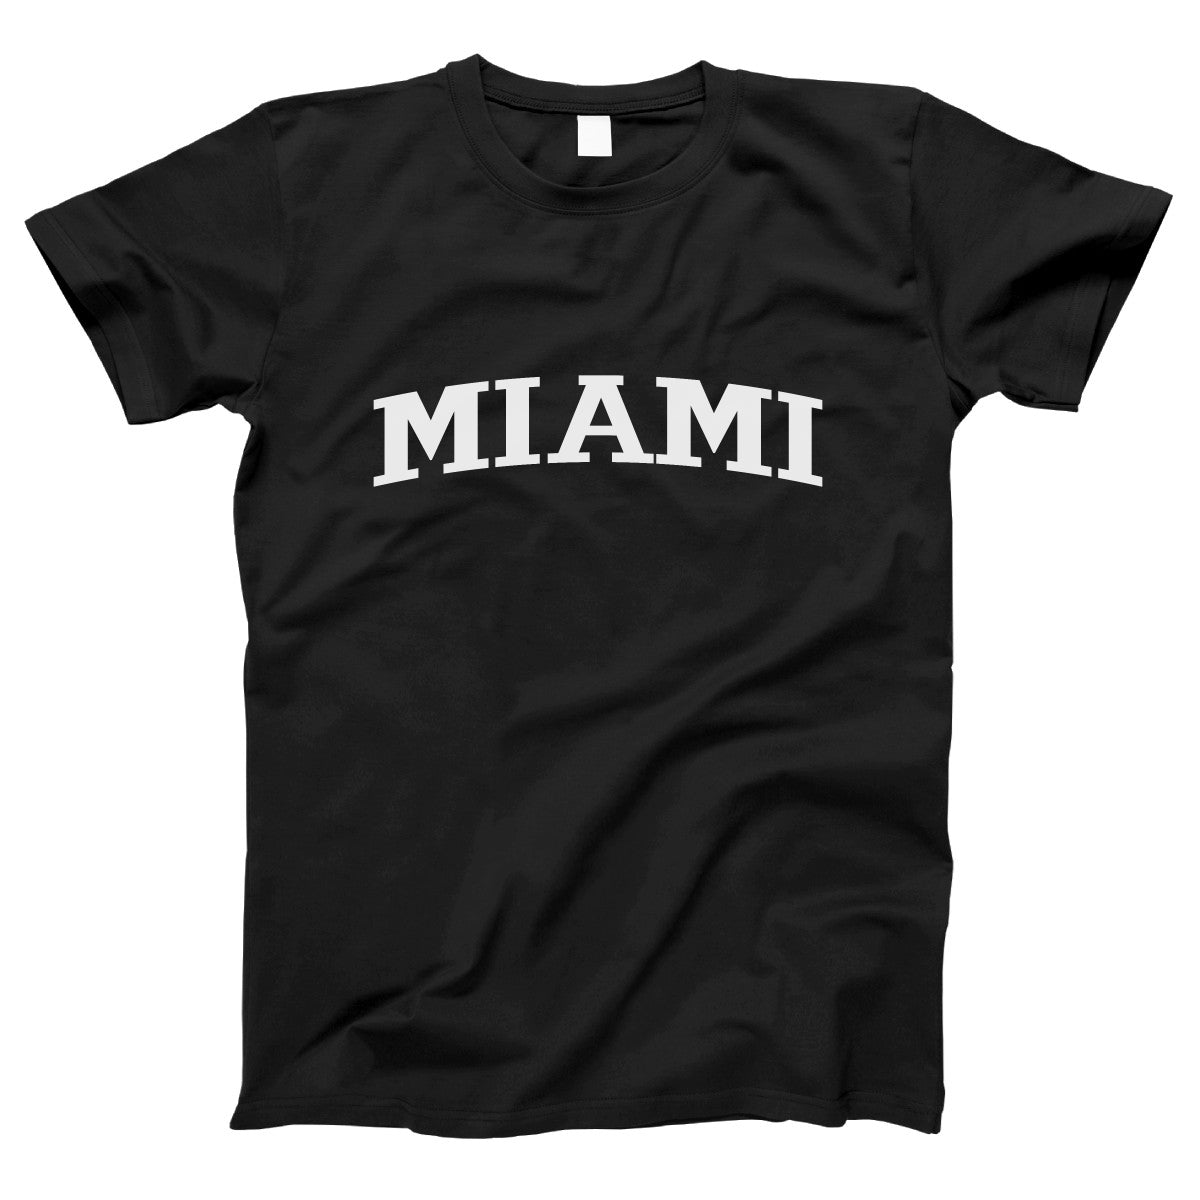 Miami Women's T-shirt